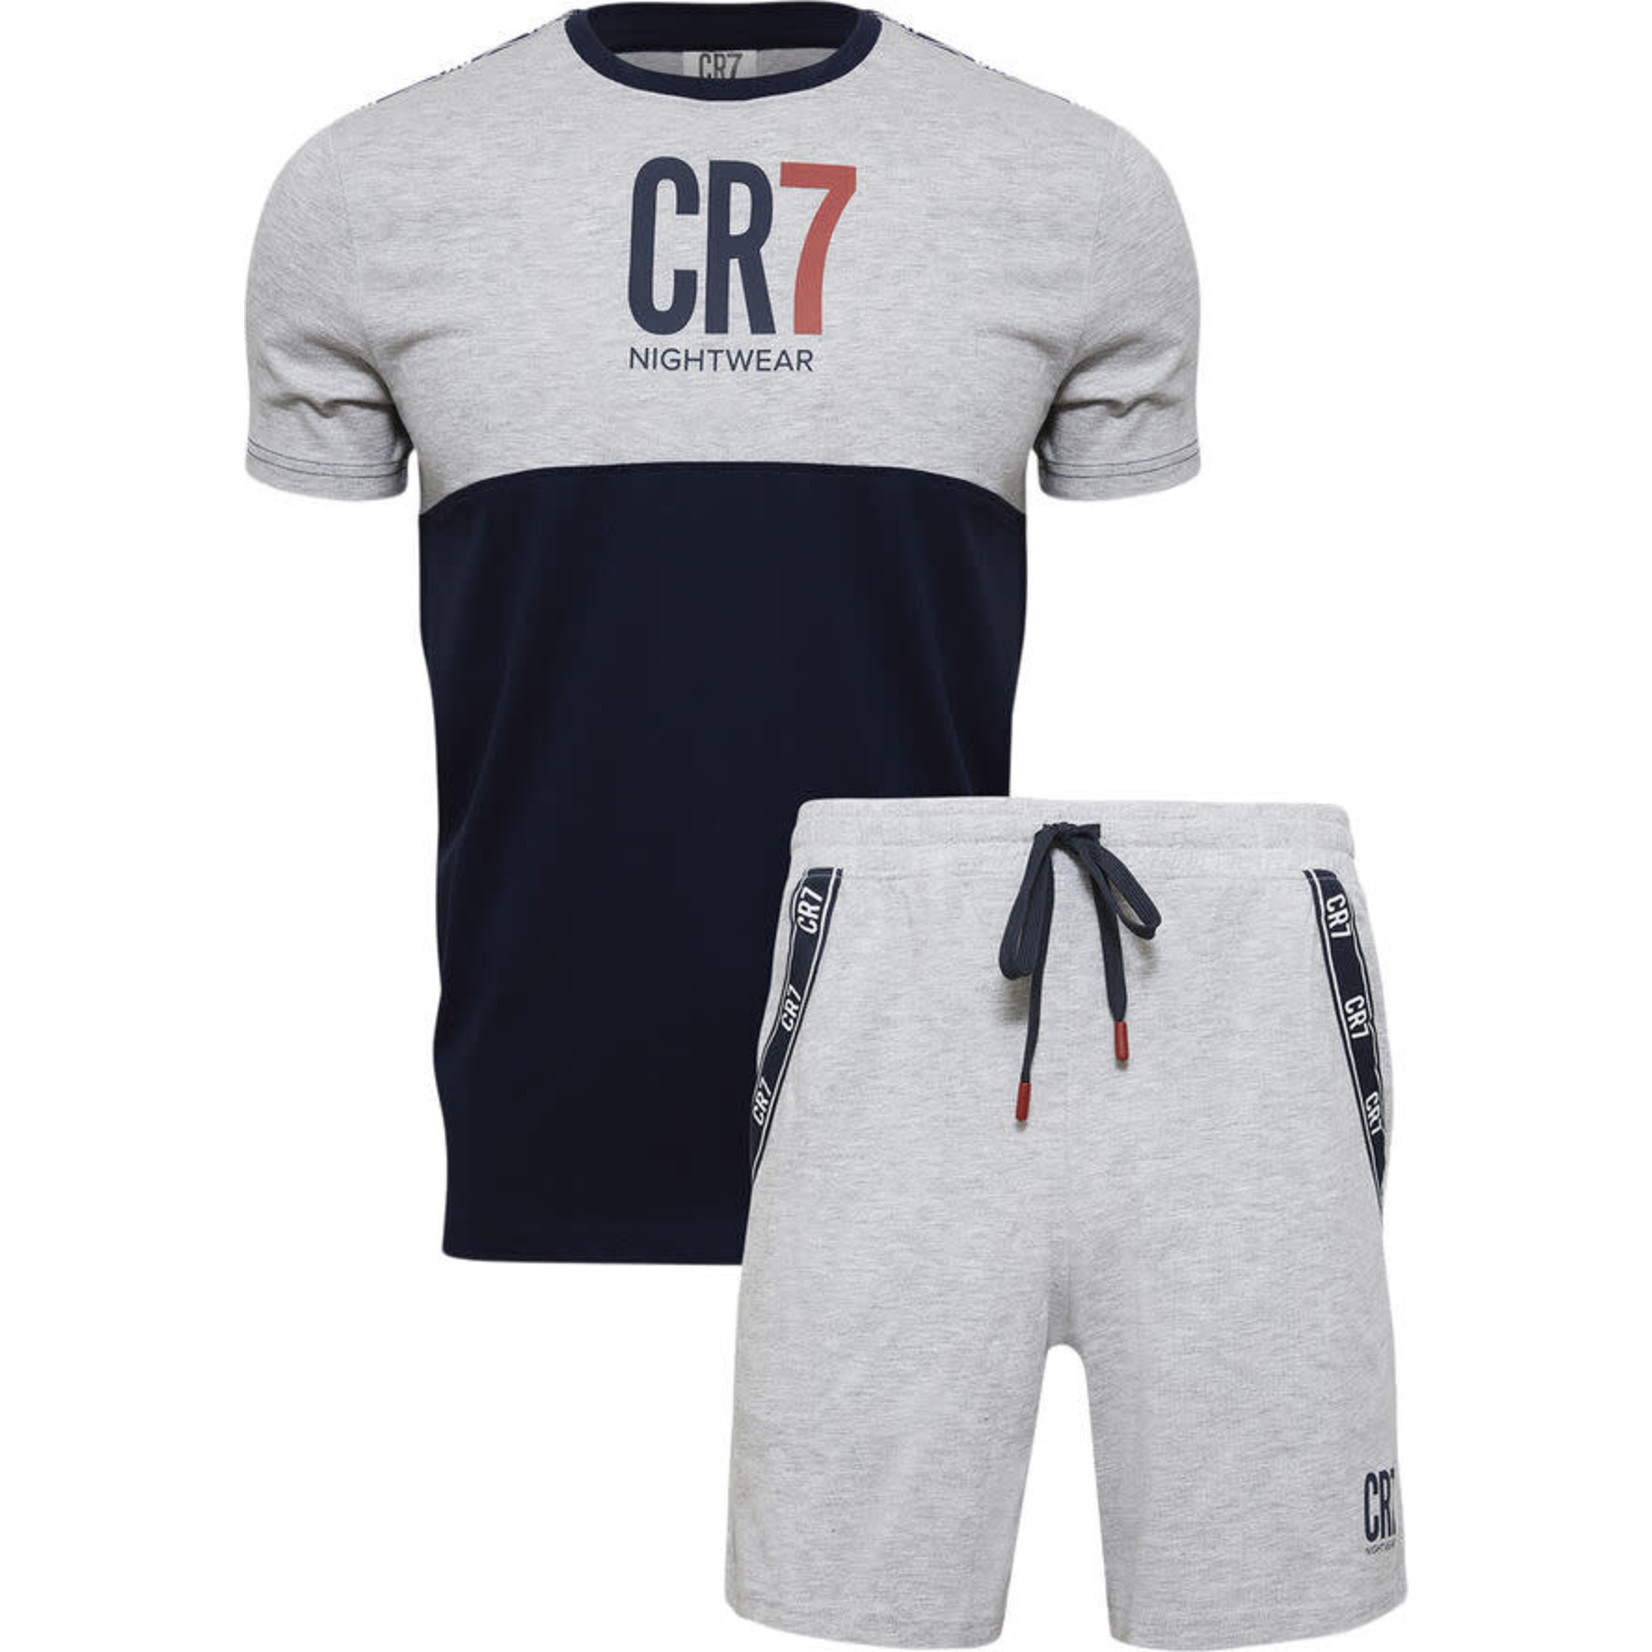 CR7 Loungewear Shorts Set - Grey Youth